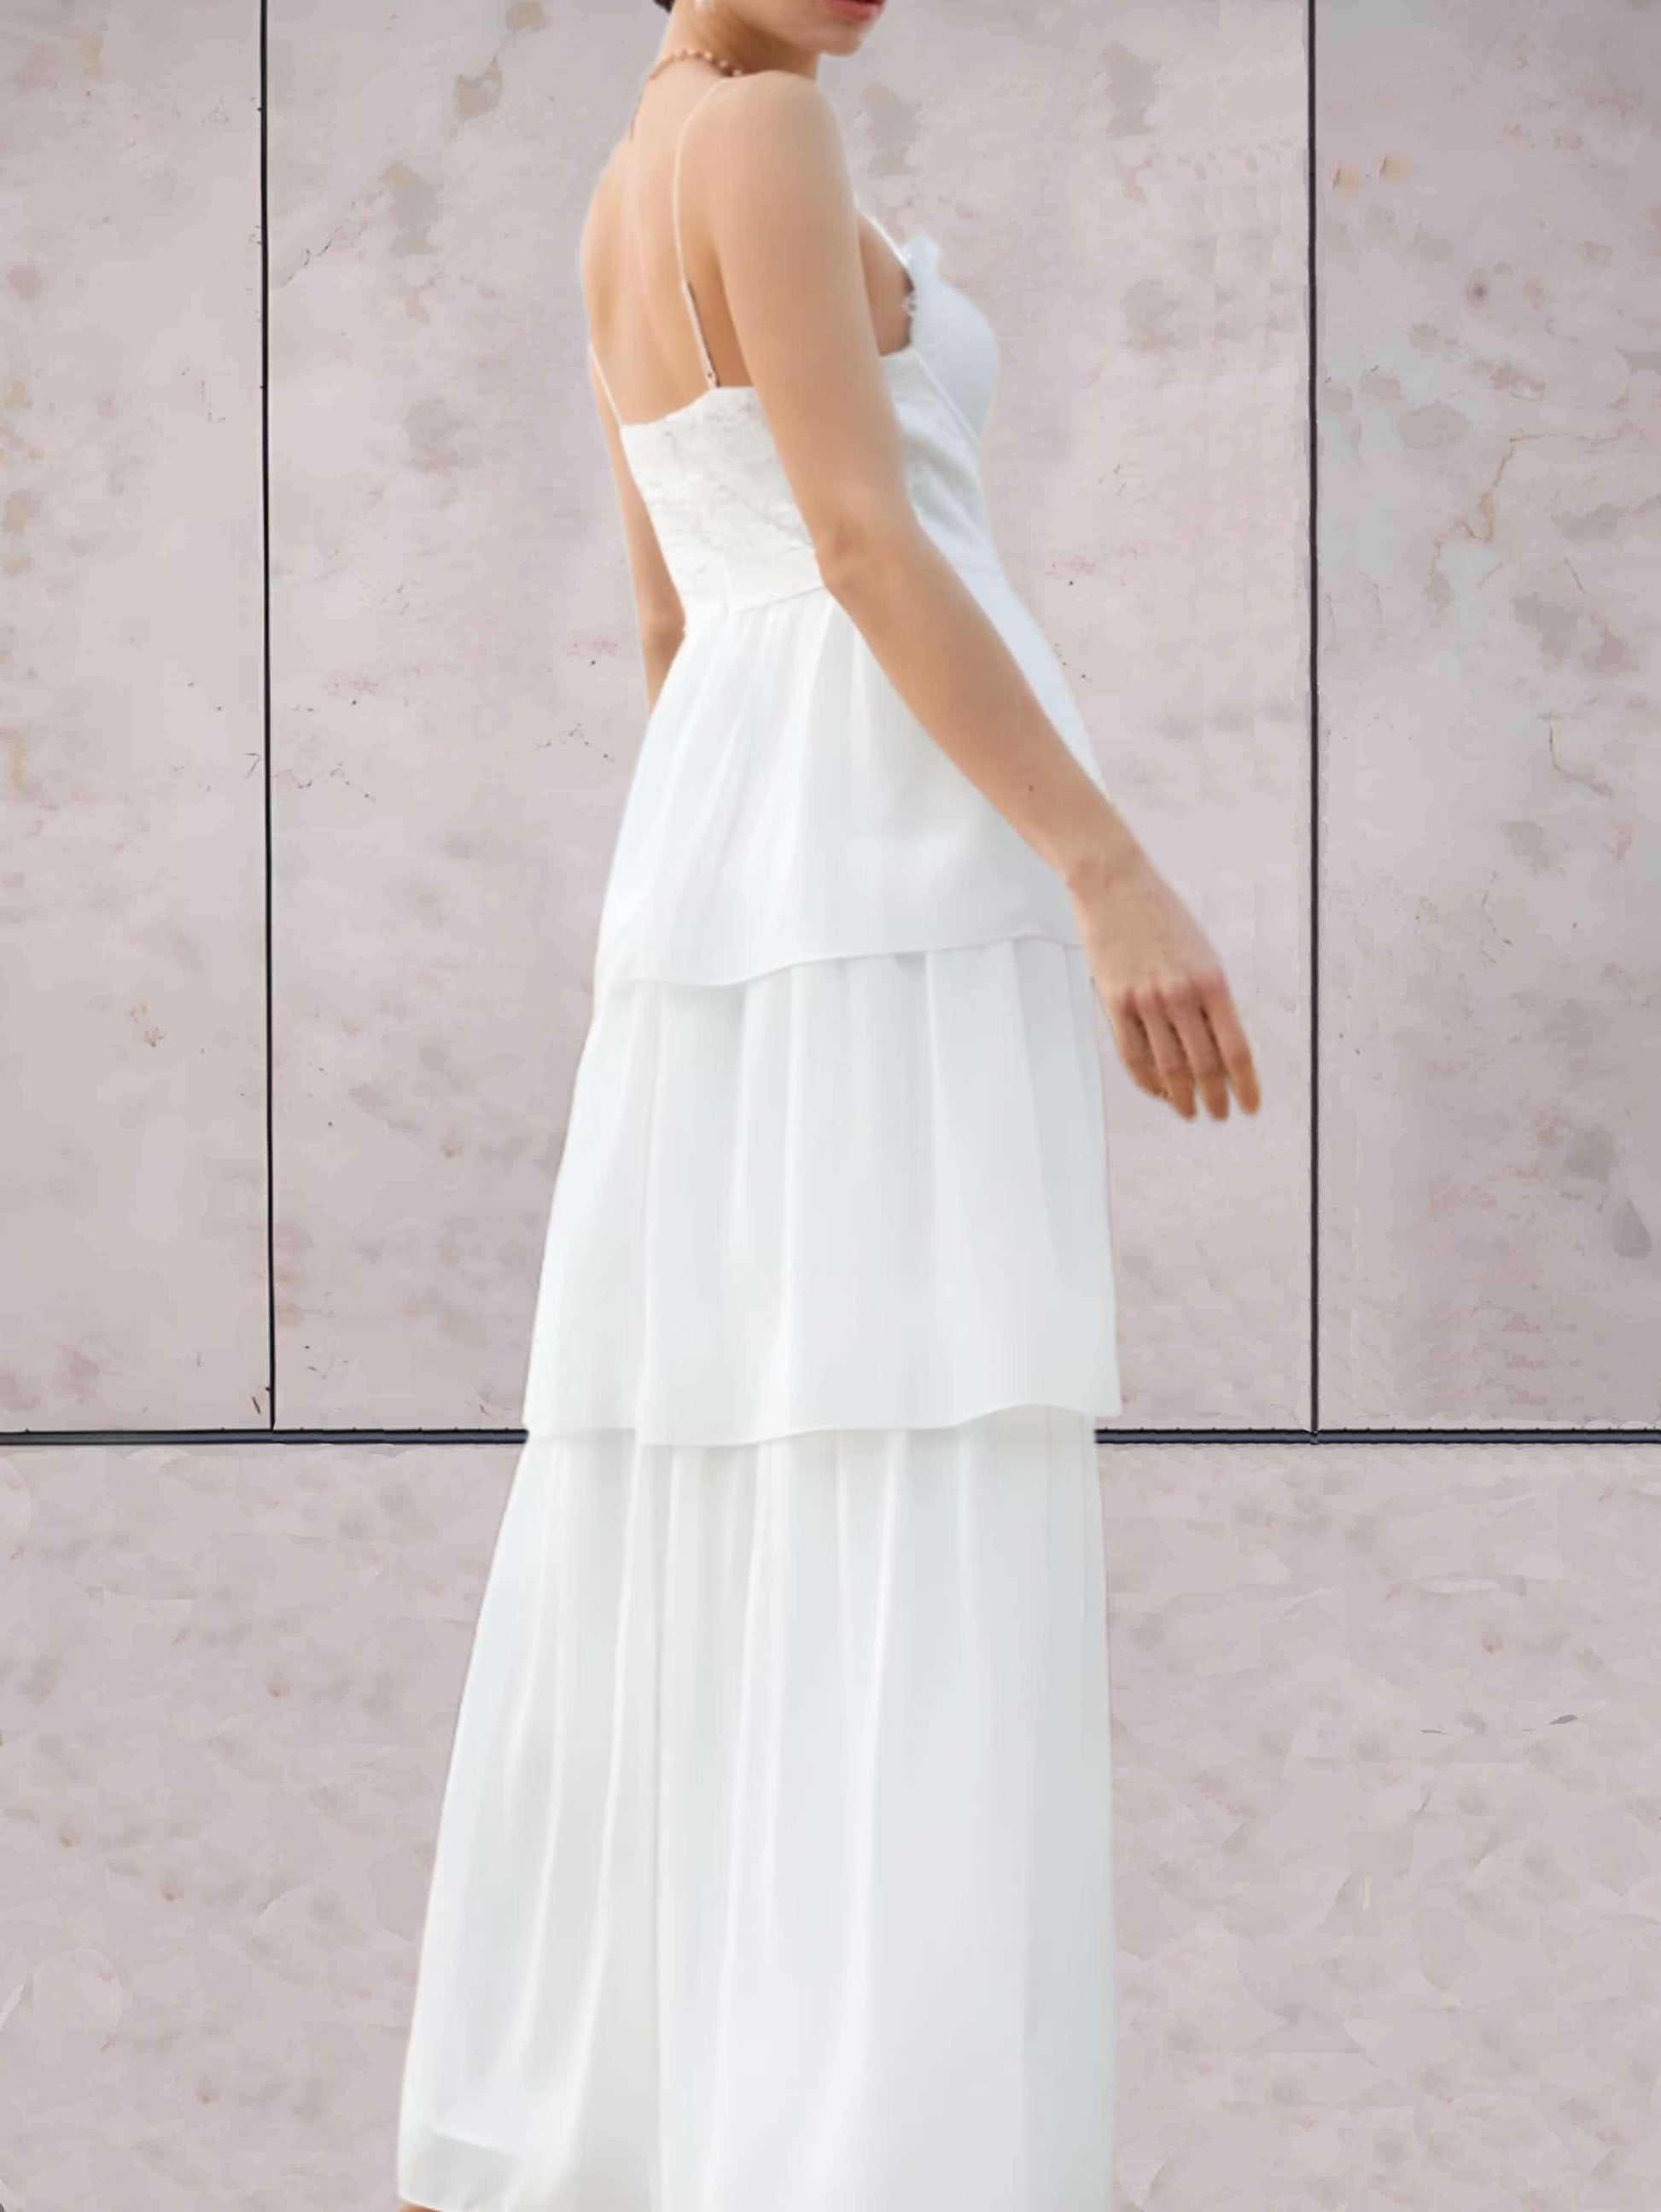 Alora - Bruidsjurk meerdere lagen wit mouwloos open rug jurk - Sky-Sense